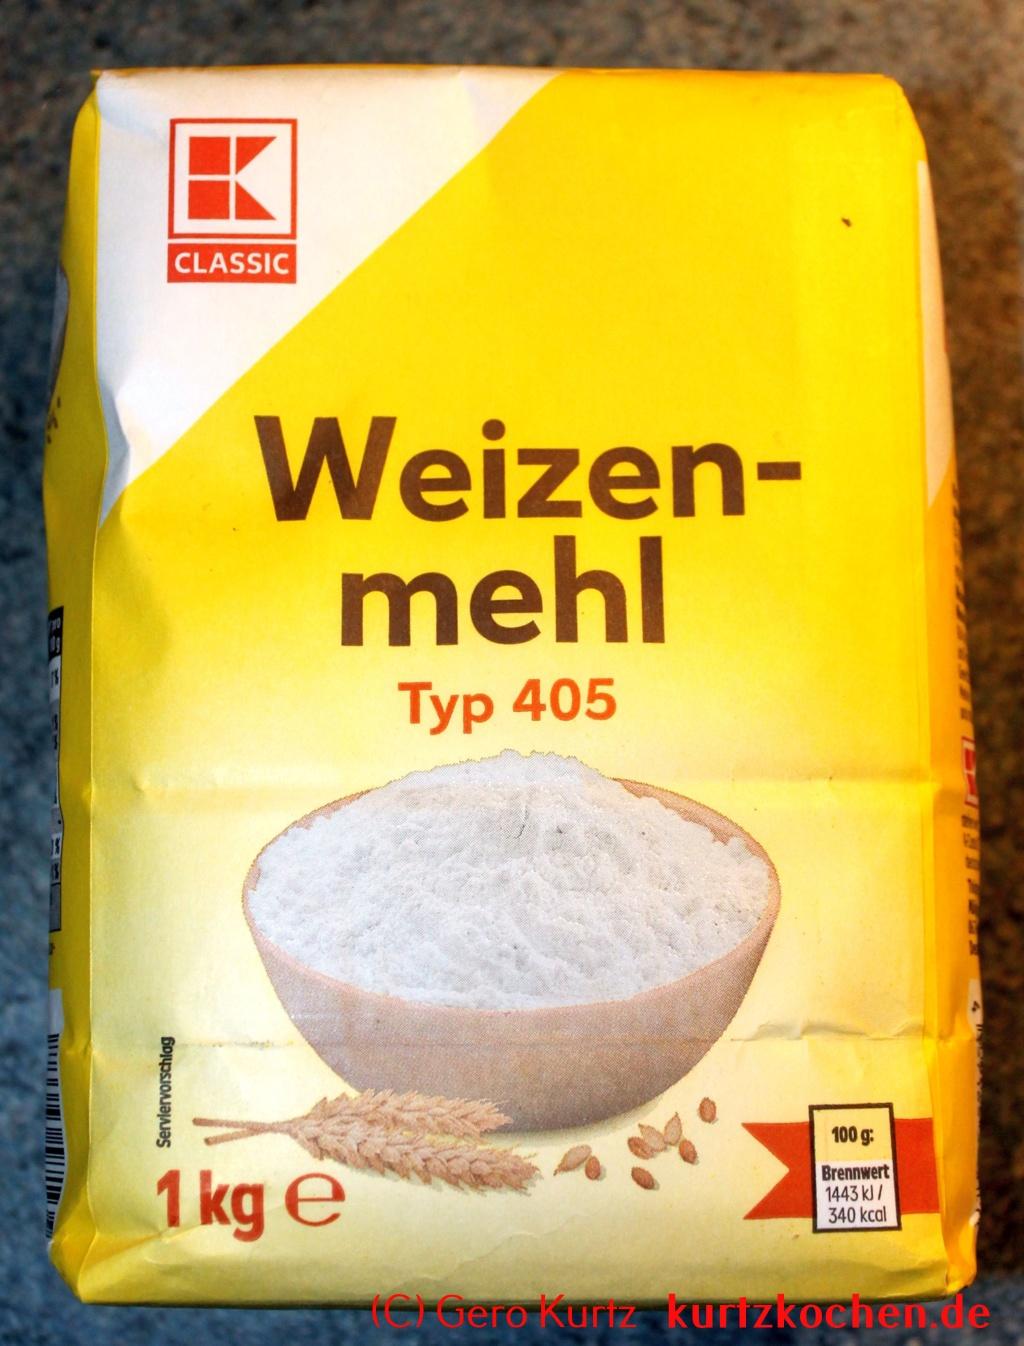 Butterspritzgebäck - Weizenmehl